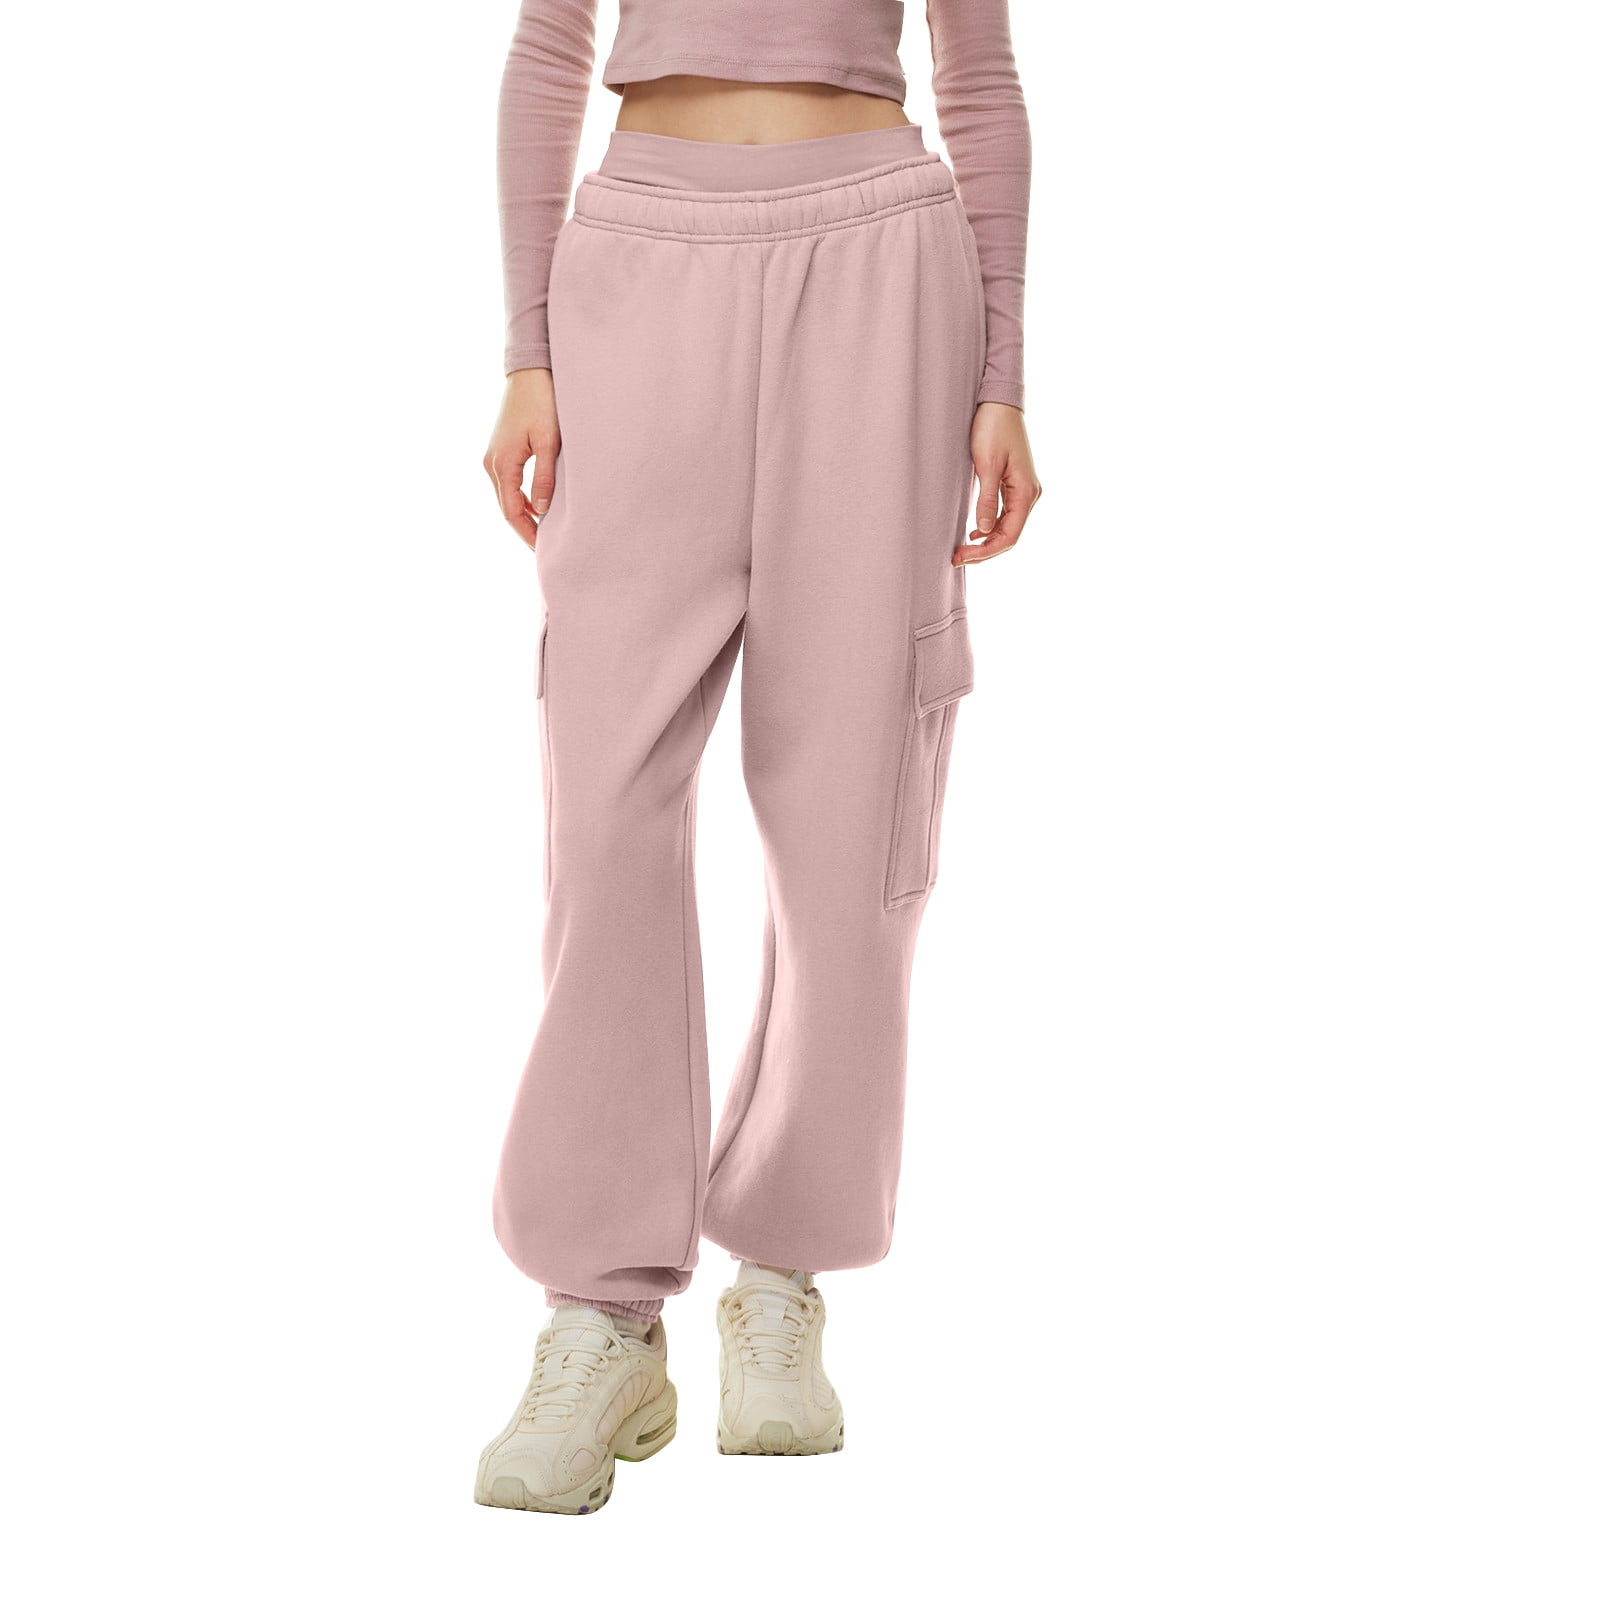 Knosfe Cute Sweatpants for Teen Girls Fleece Lined Straight Leg